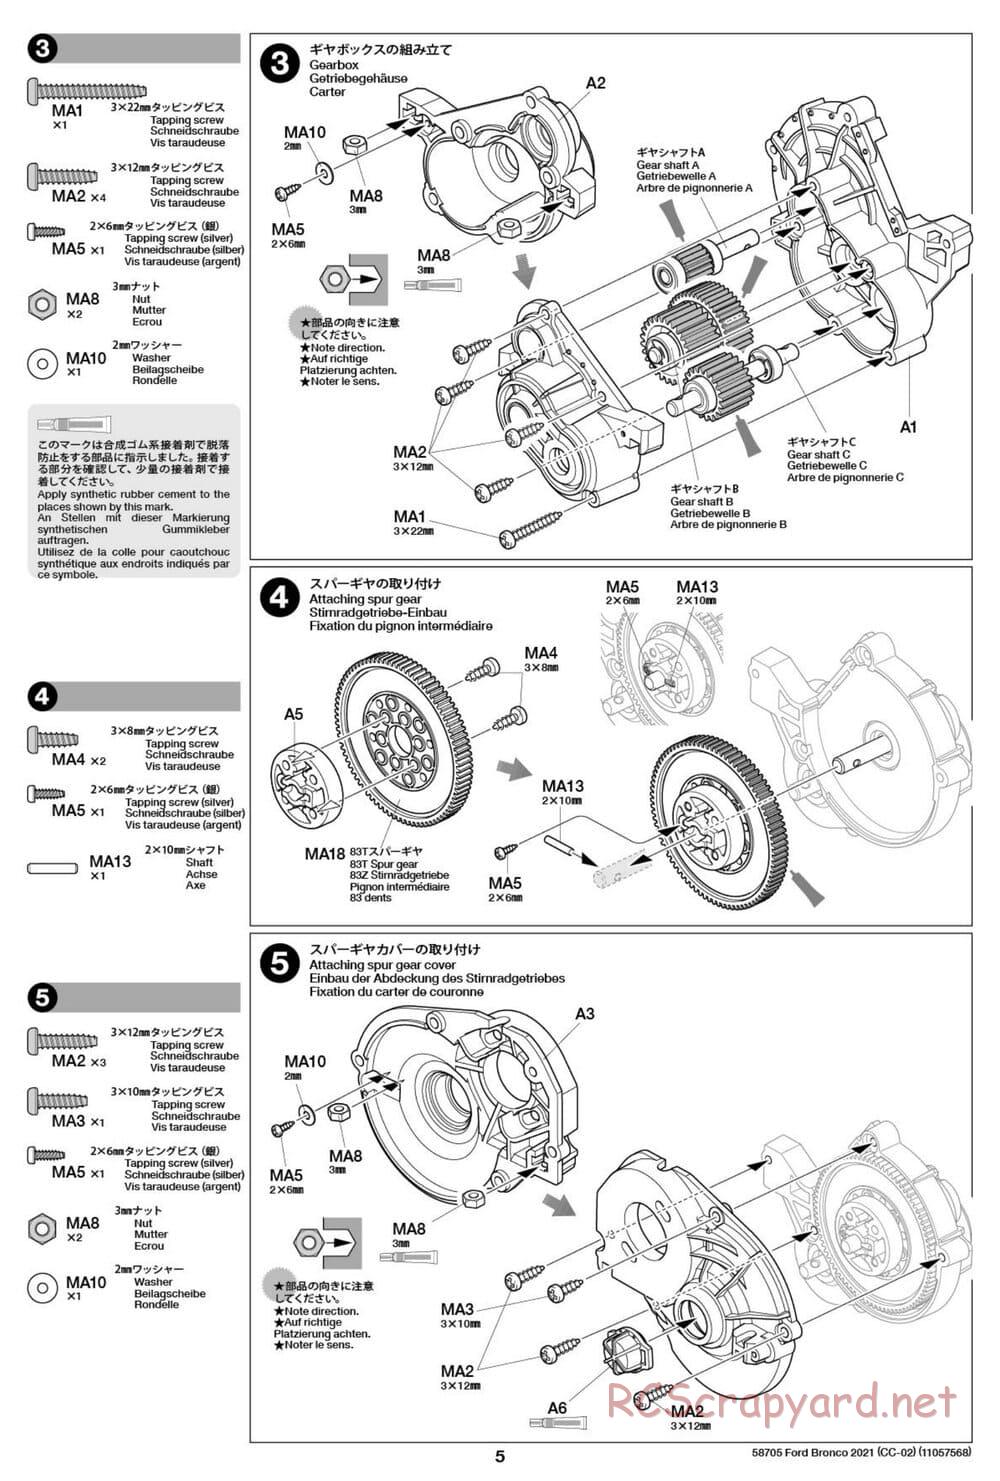 Tamiya - Ford Bronco 2021 - CC-02 Chassis - Manual - Page 5